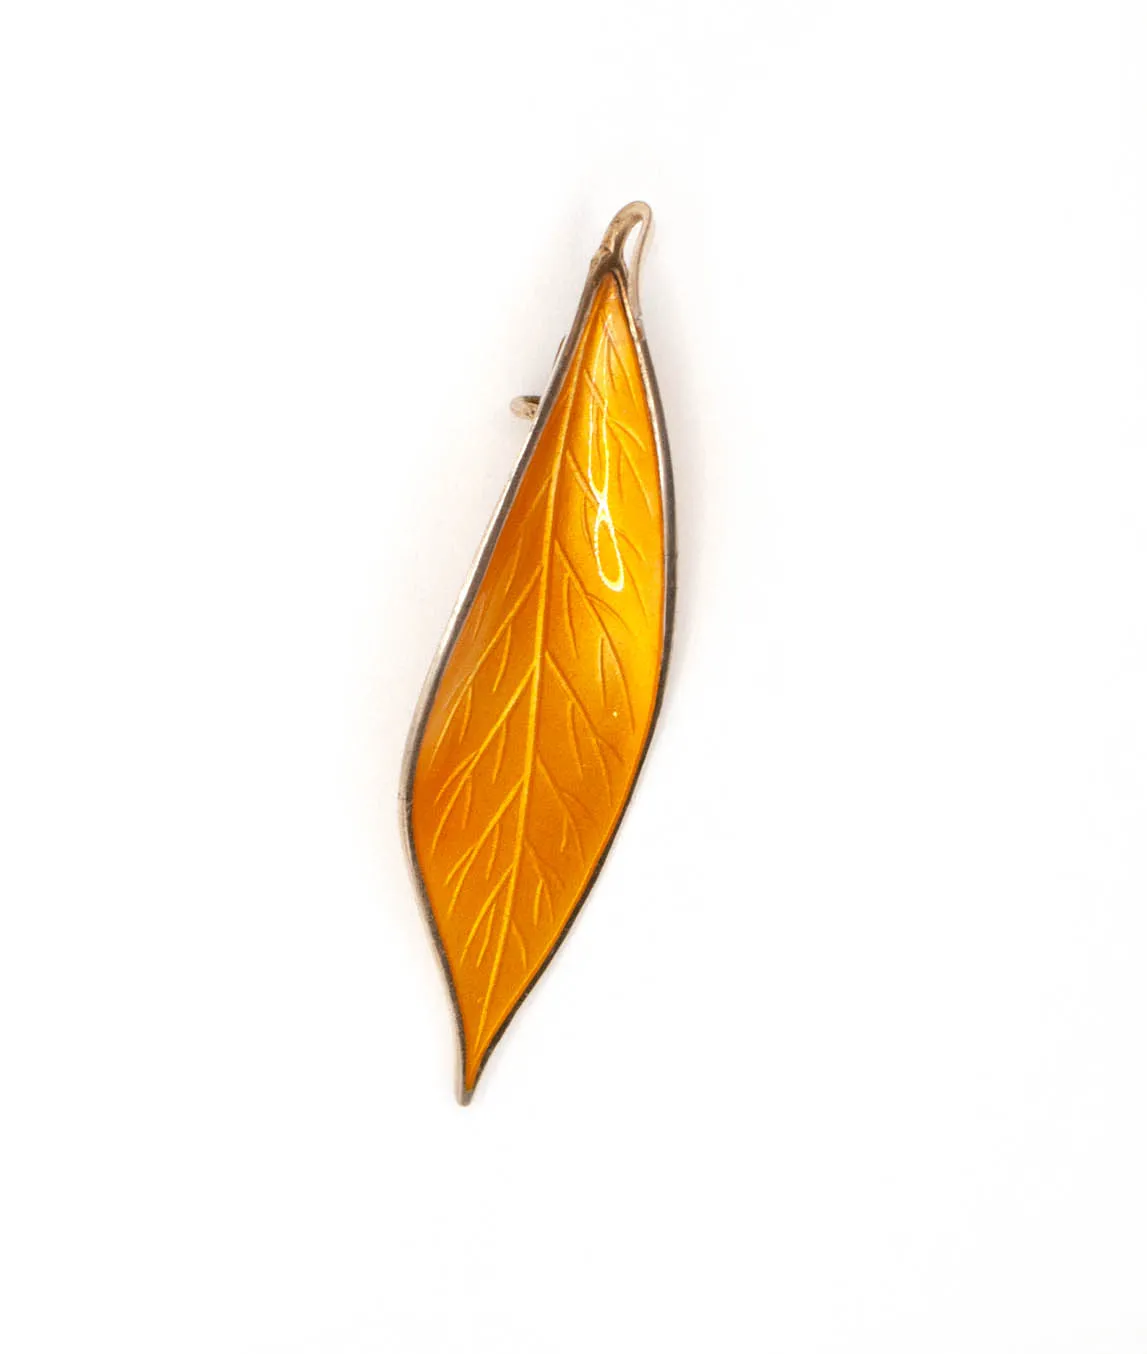 Yellow enamel on sterling silver leaf brooch by David Andersen